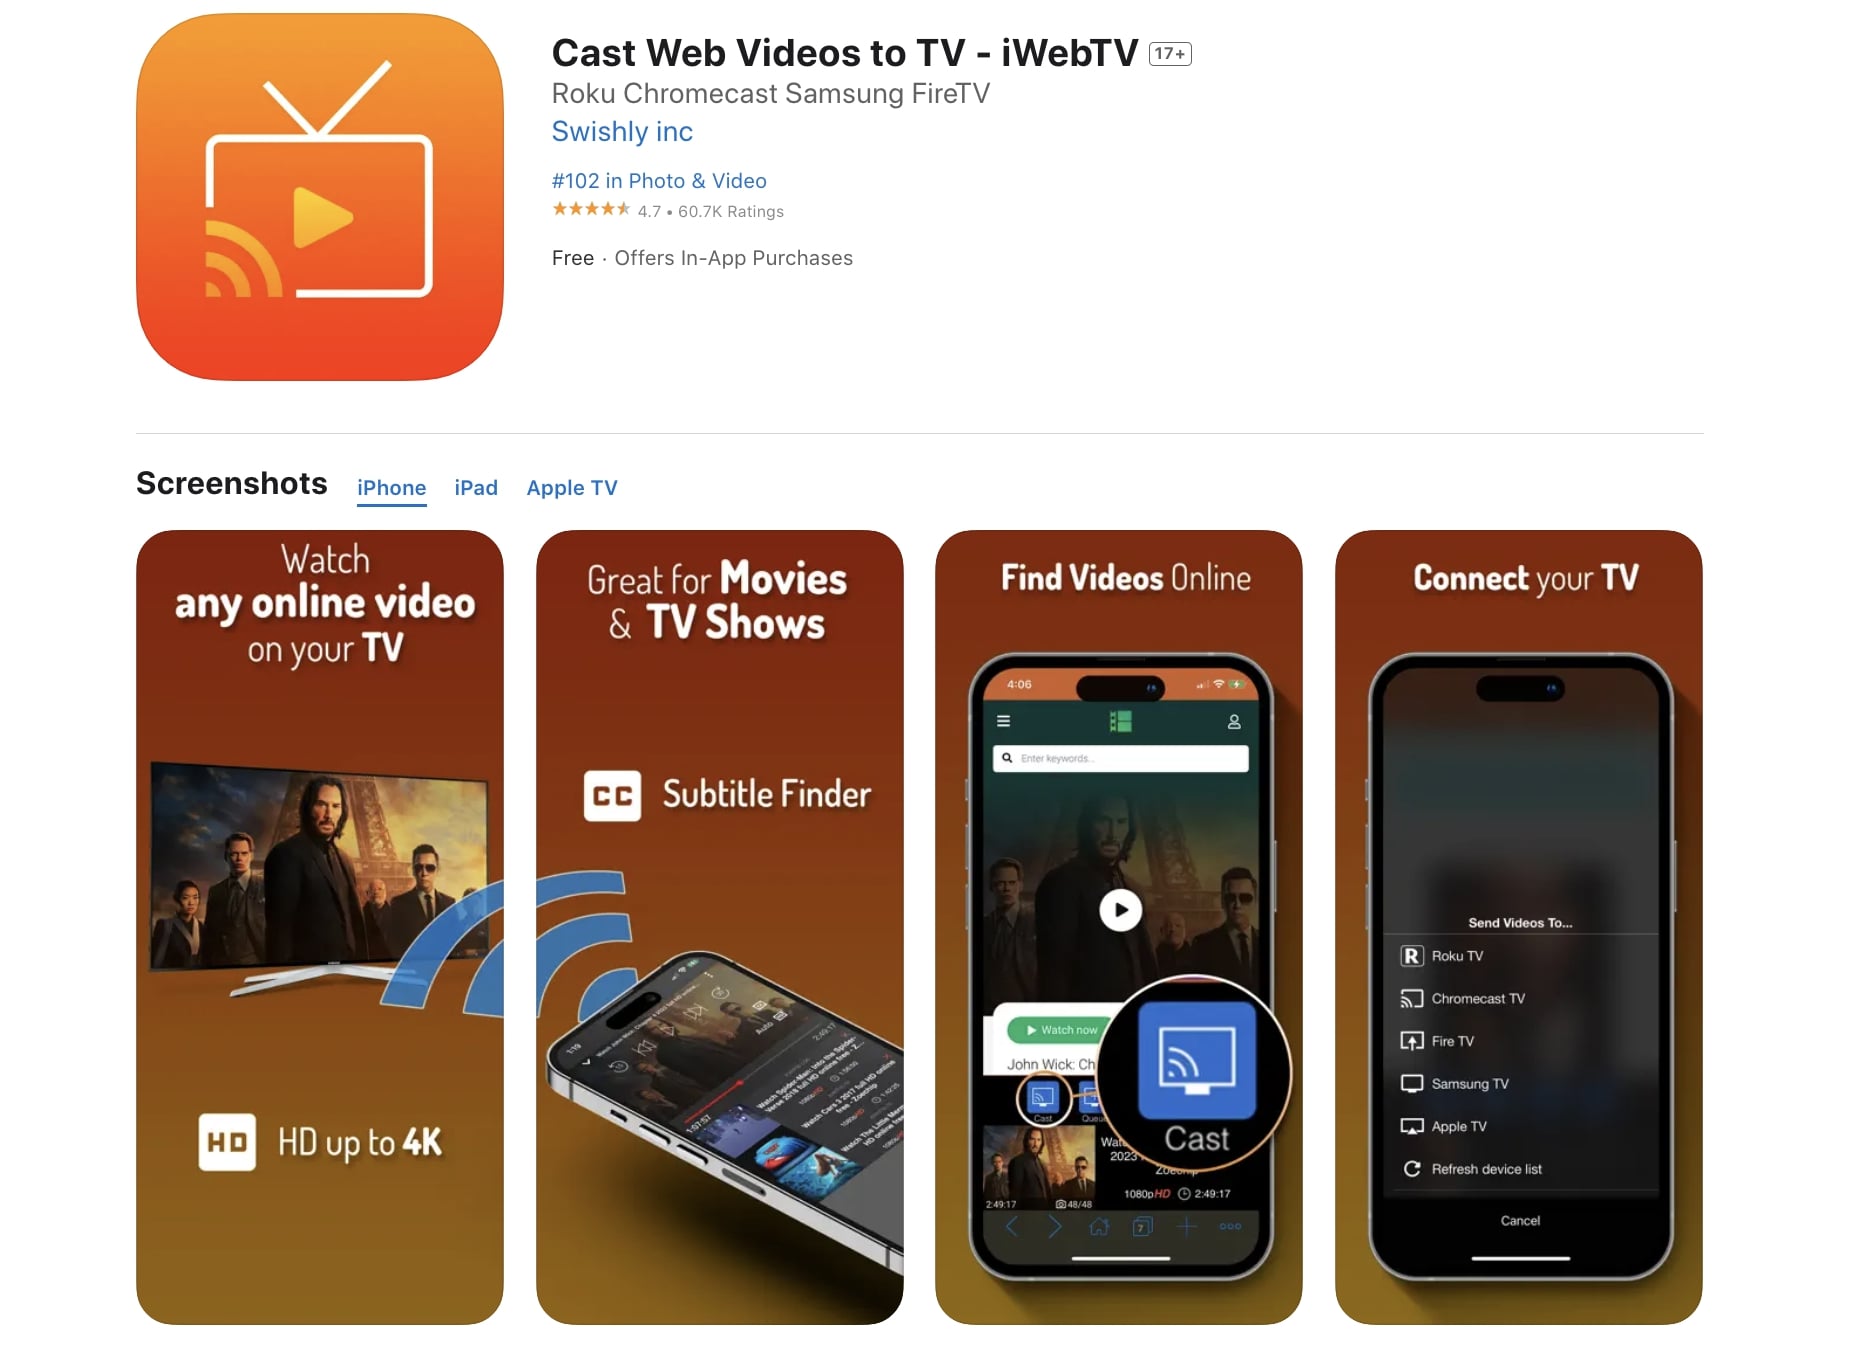 The iWebTV: Cast Web Videos to TV app in the App Store